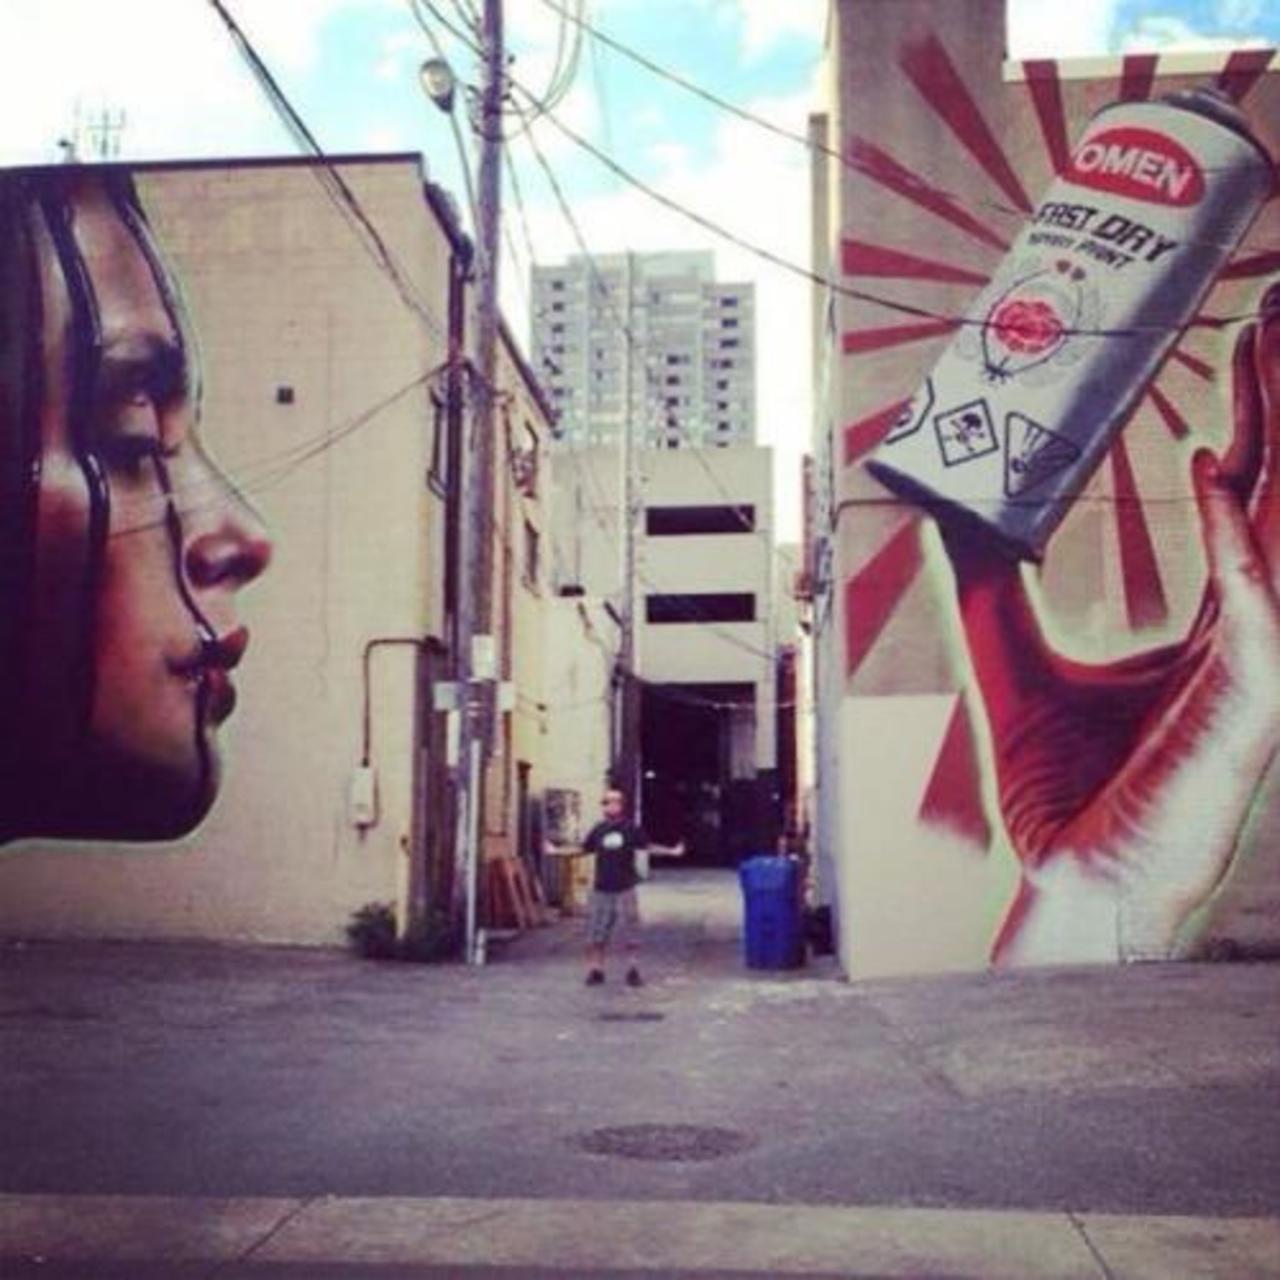 ##Streetart ##Sprayart ##Stencil ##Graffiti ... - #Mural - #ZangArt #Showcase - http://bit.ly/1BUy4TP http://t.co/ySuWQAFV1n